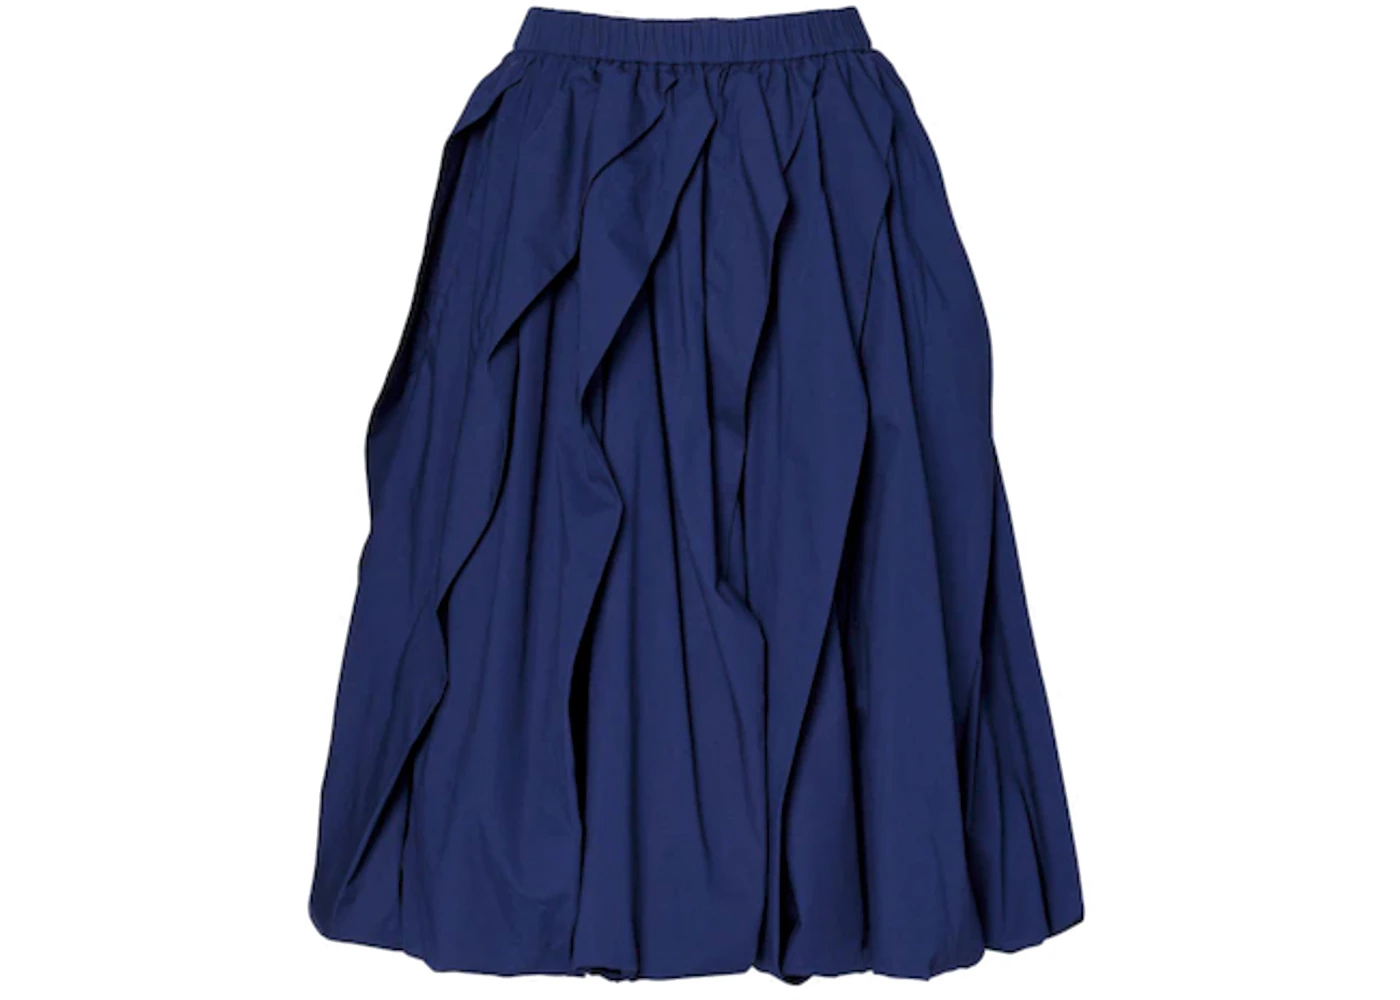 Uniqlo x MARNI Women's Balloon Shape Skirt (Asia Sizing) Navy - SS22 - US